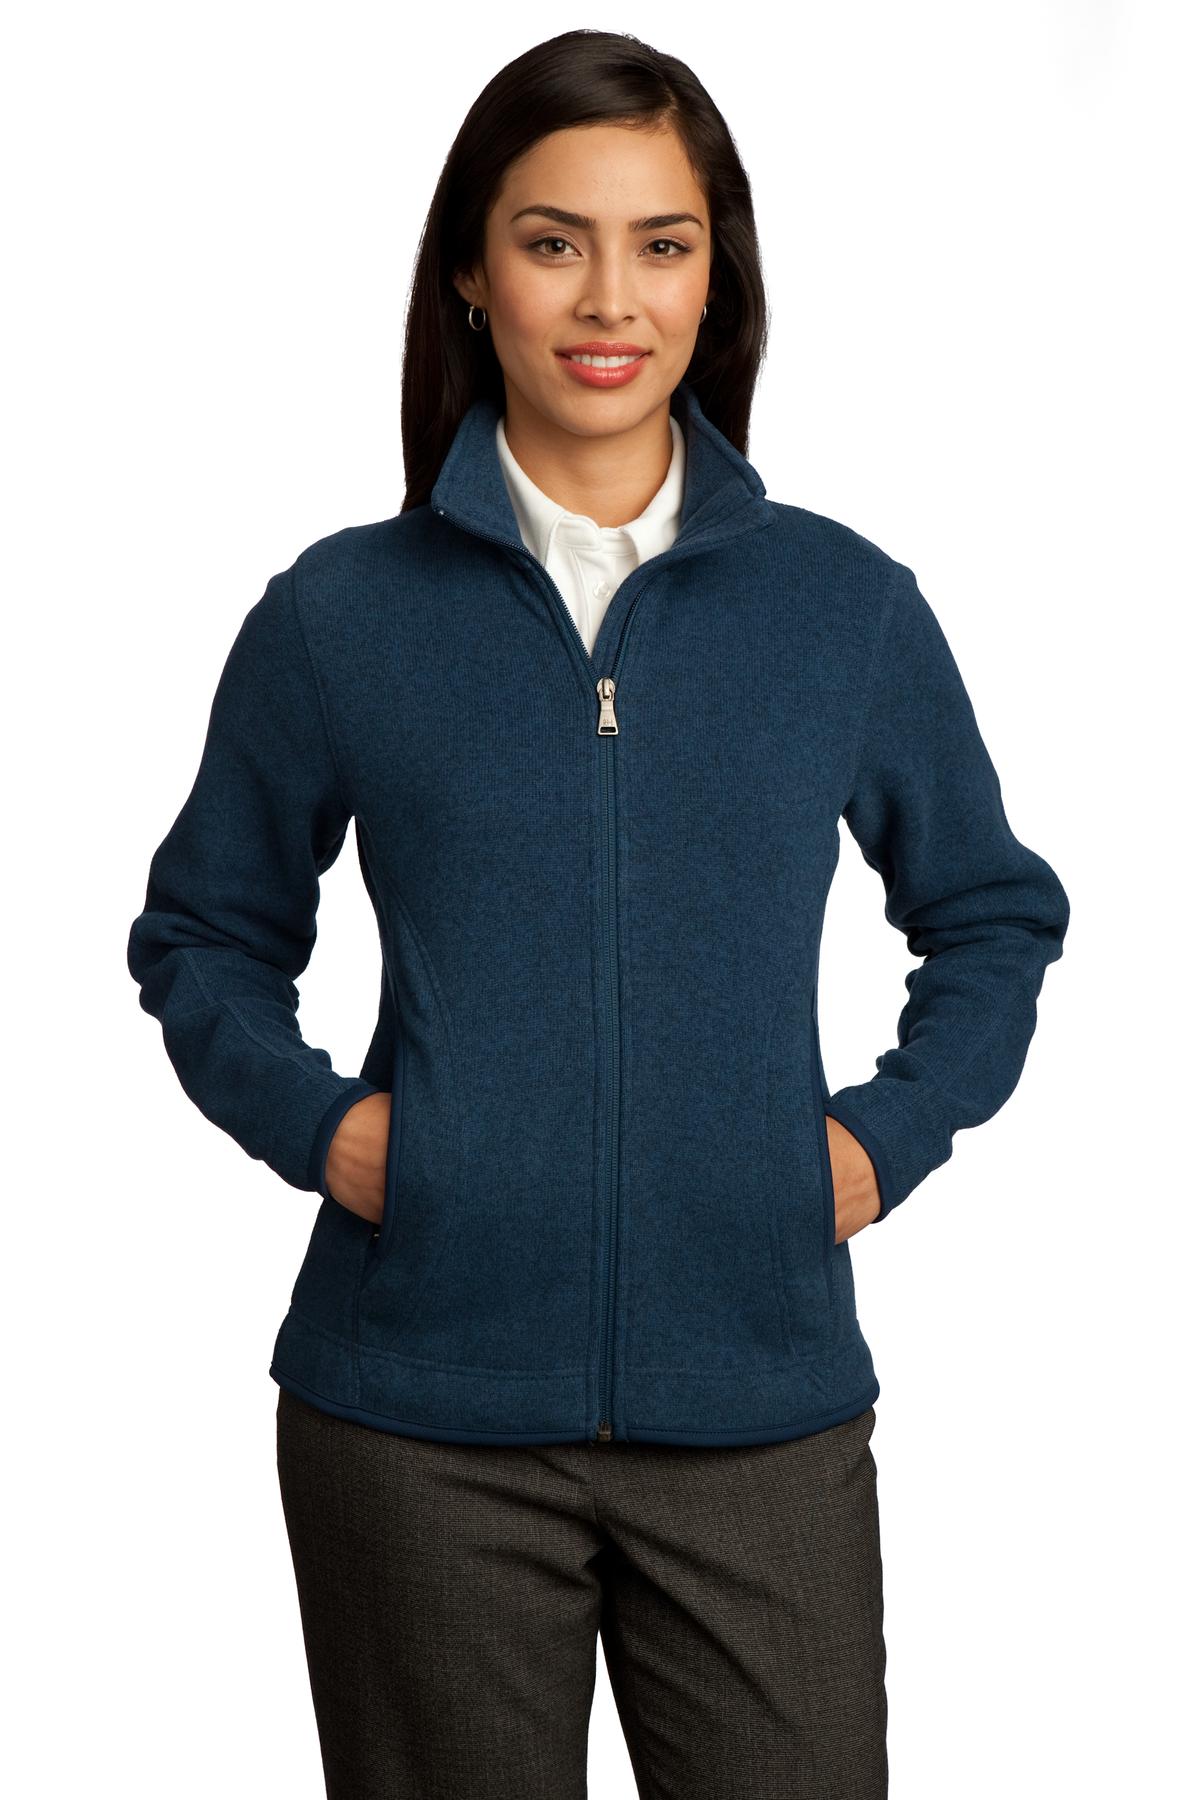 Red House - Ladies Sweater Fleece Full-Zip Jacket Medium RH55